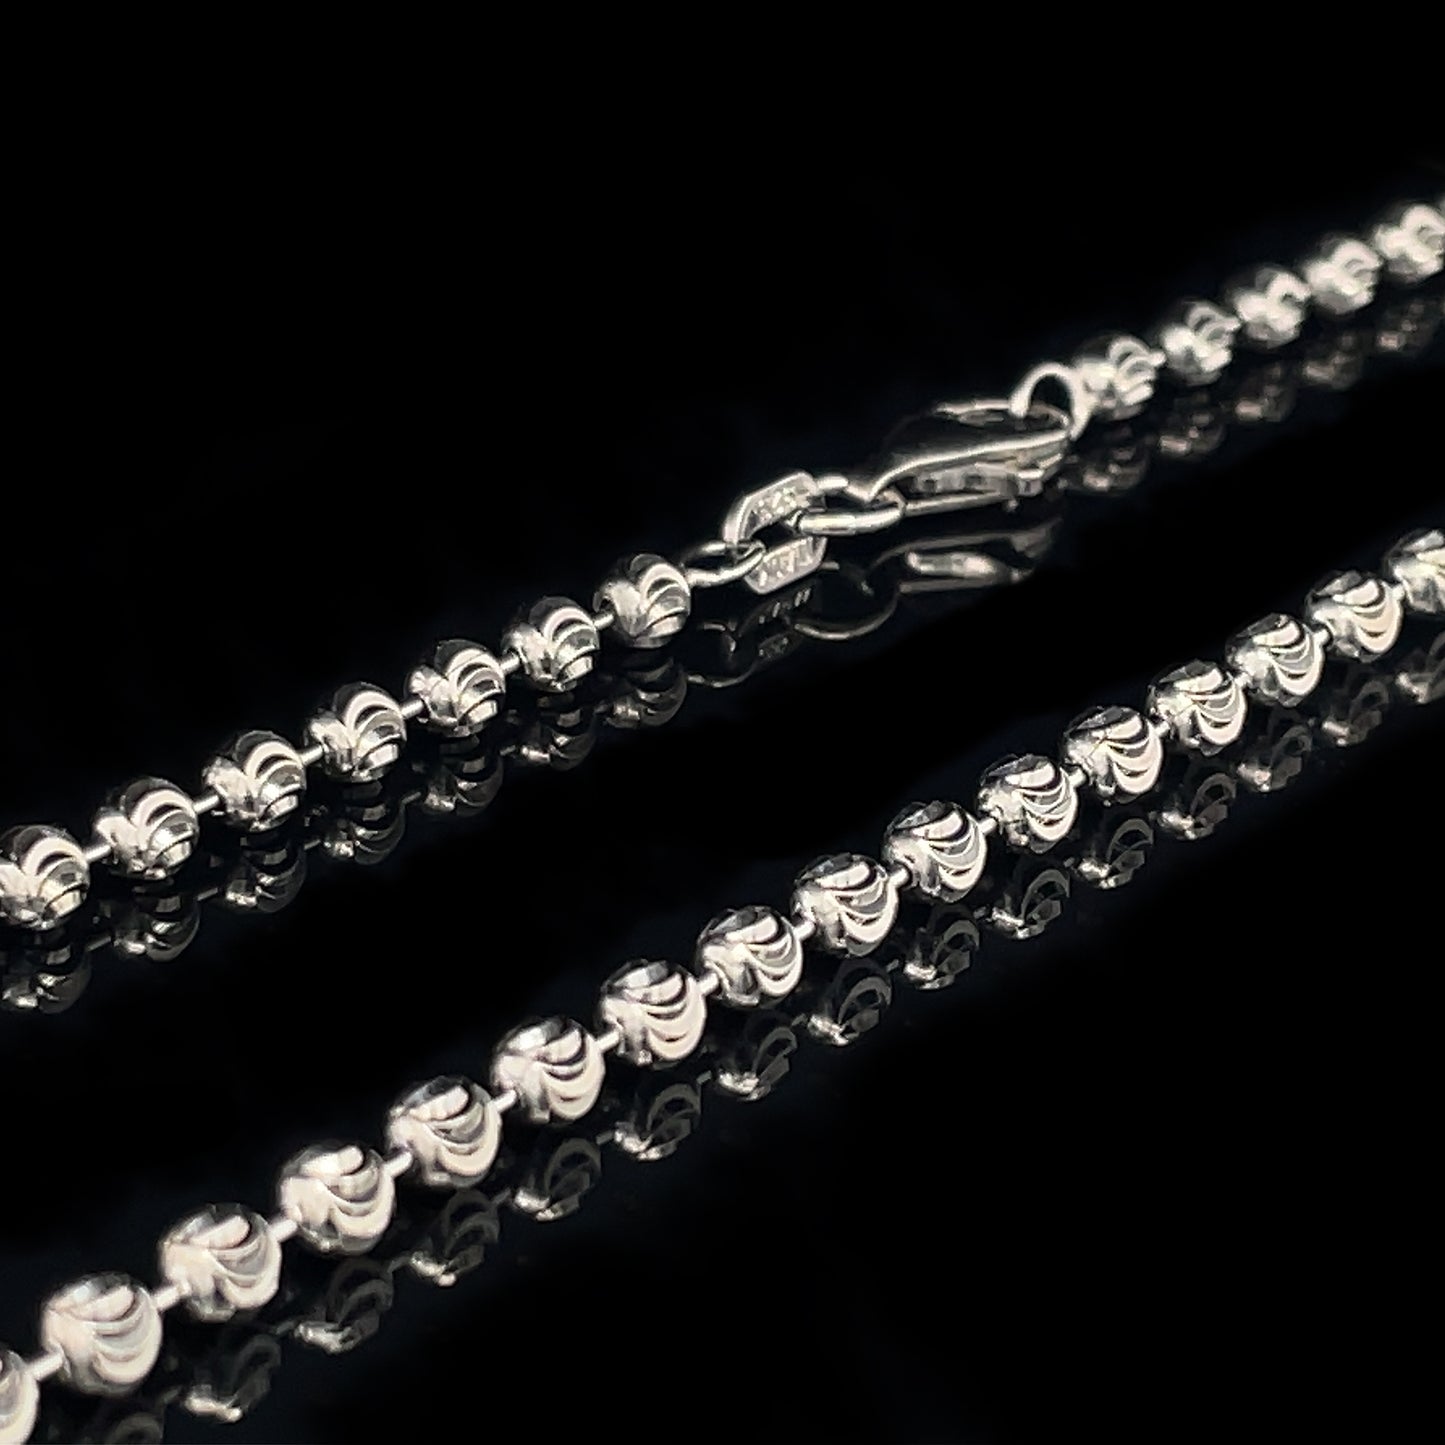 3mm Gunmetal Ball Chain w/ Diamond Cuts in Sterling Silver